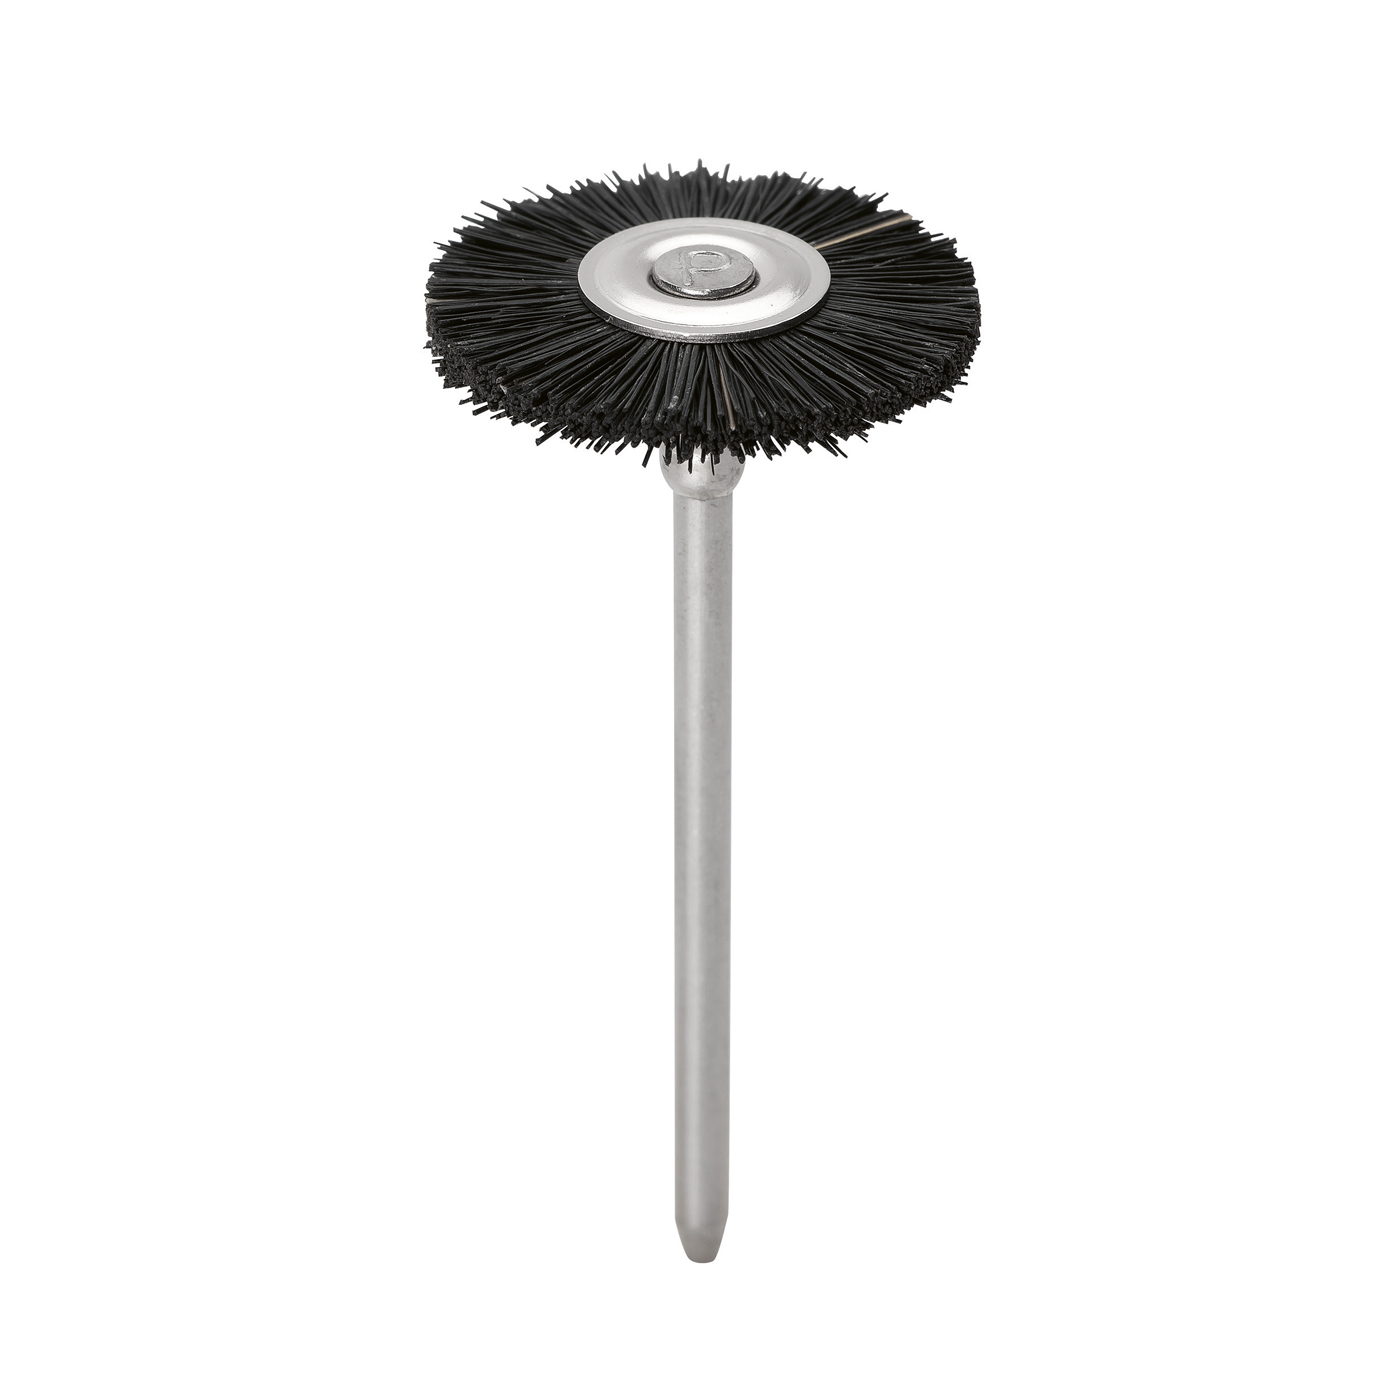 Mini Brushes, Wheels, Chungking, Black, ø 21 mm - 12 pieces